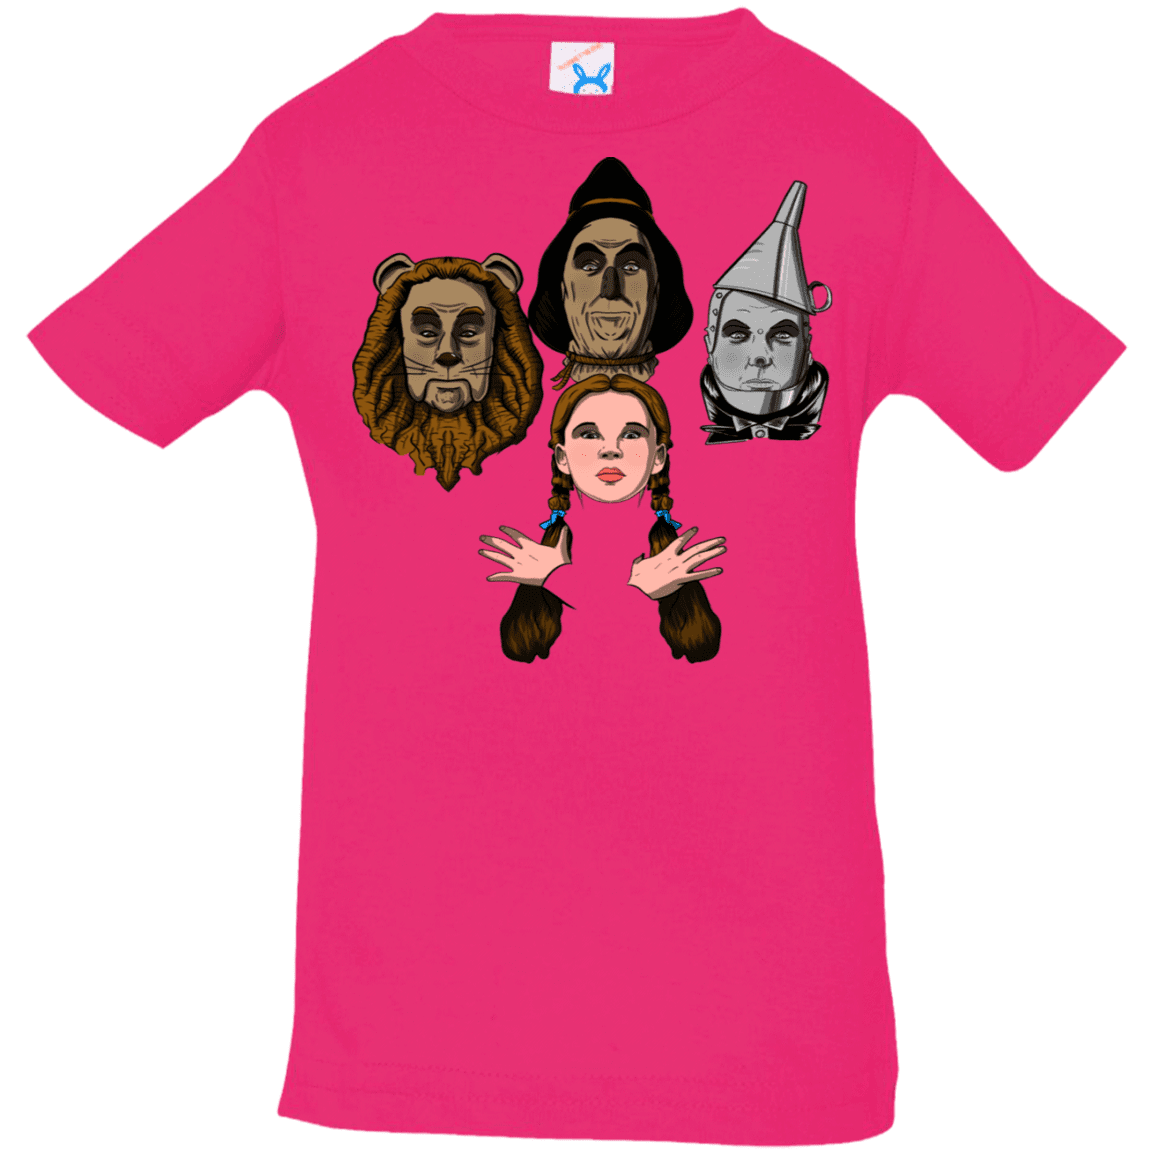 T-Shirts Hot Pink / 6 Months Oz Rhapsody Infant Premium T-Shirt